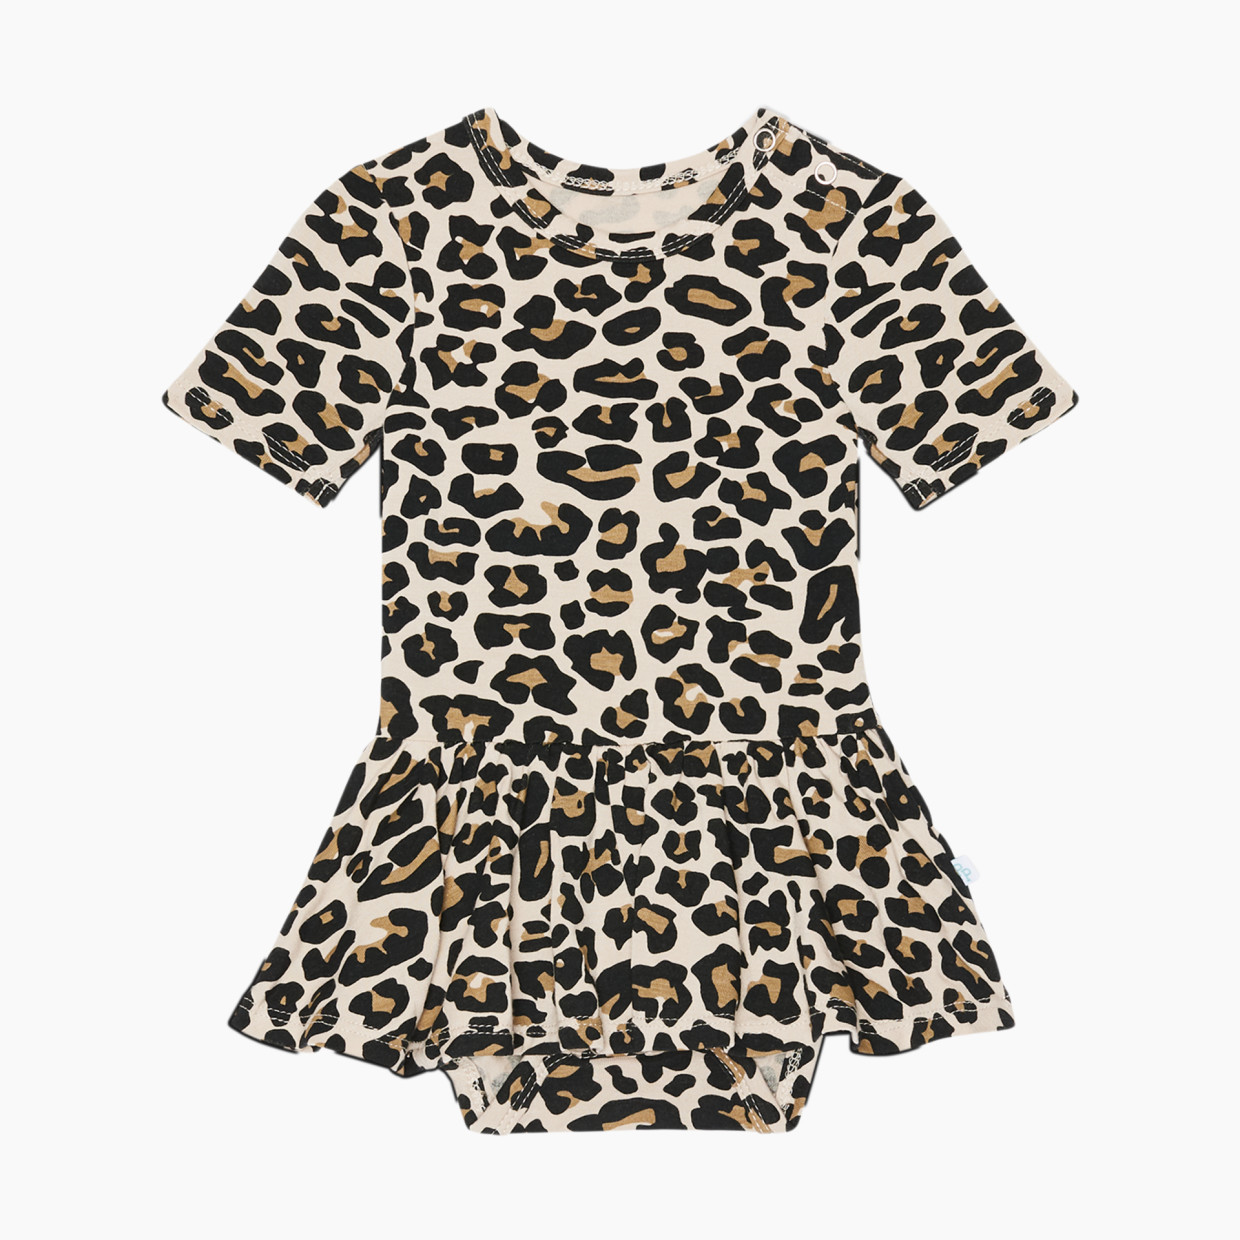 Posh Peanut Short Sleeve with Twirl Skirt Bodysuit - Lana Leopard Tan, 0-3 Months.